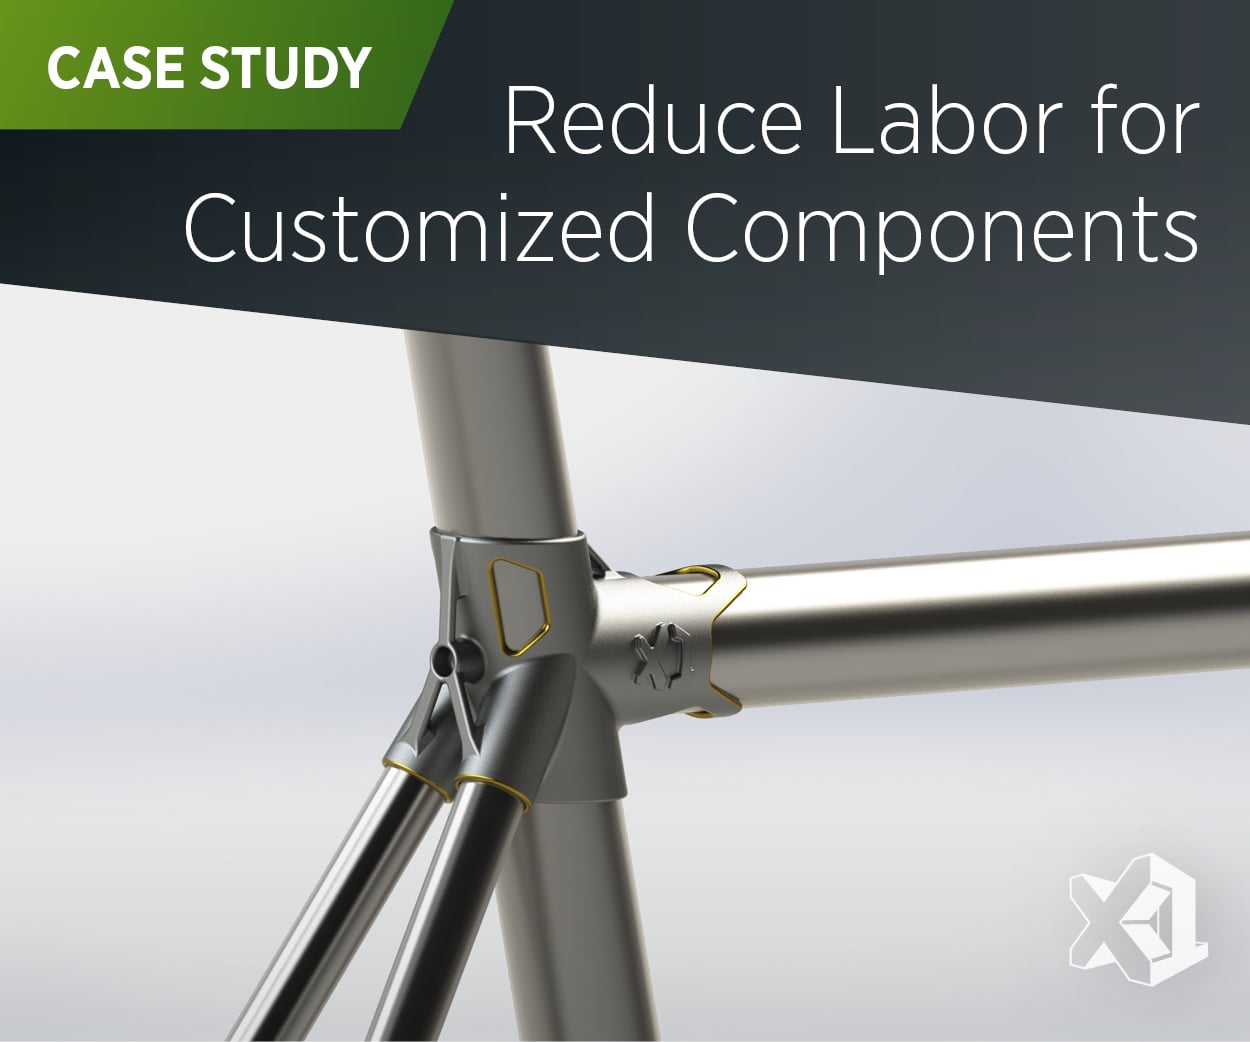 Custom bicycle frame builder saved weeks in labor with ExOne metal 3D printing